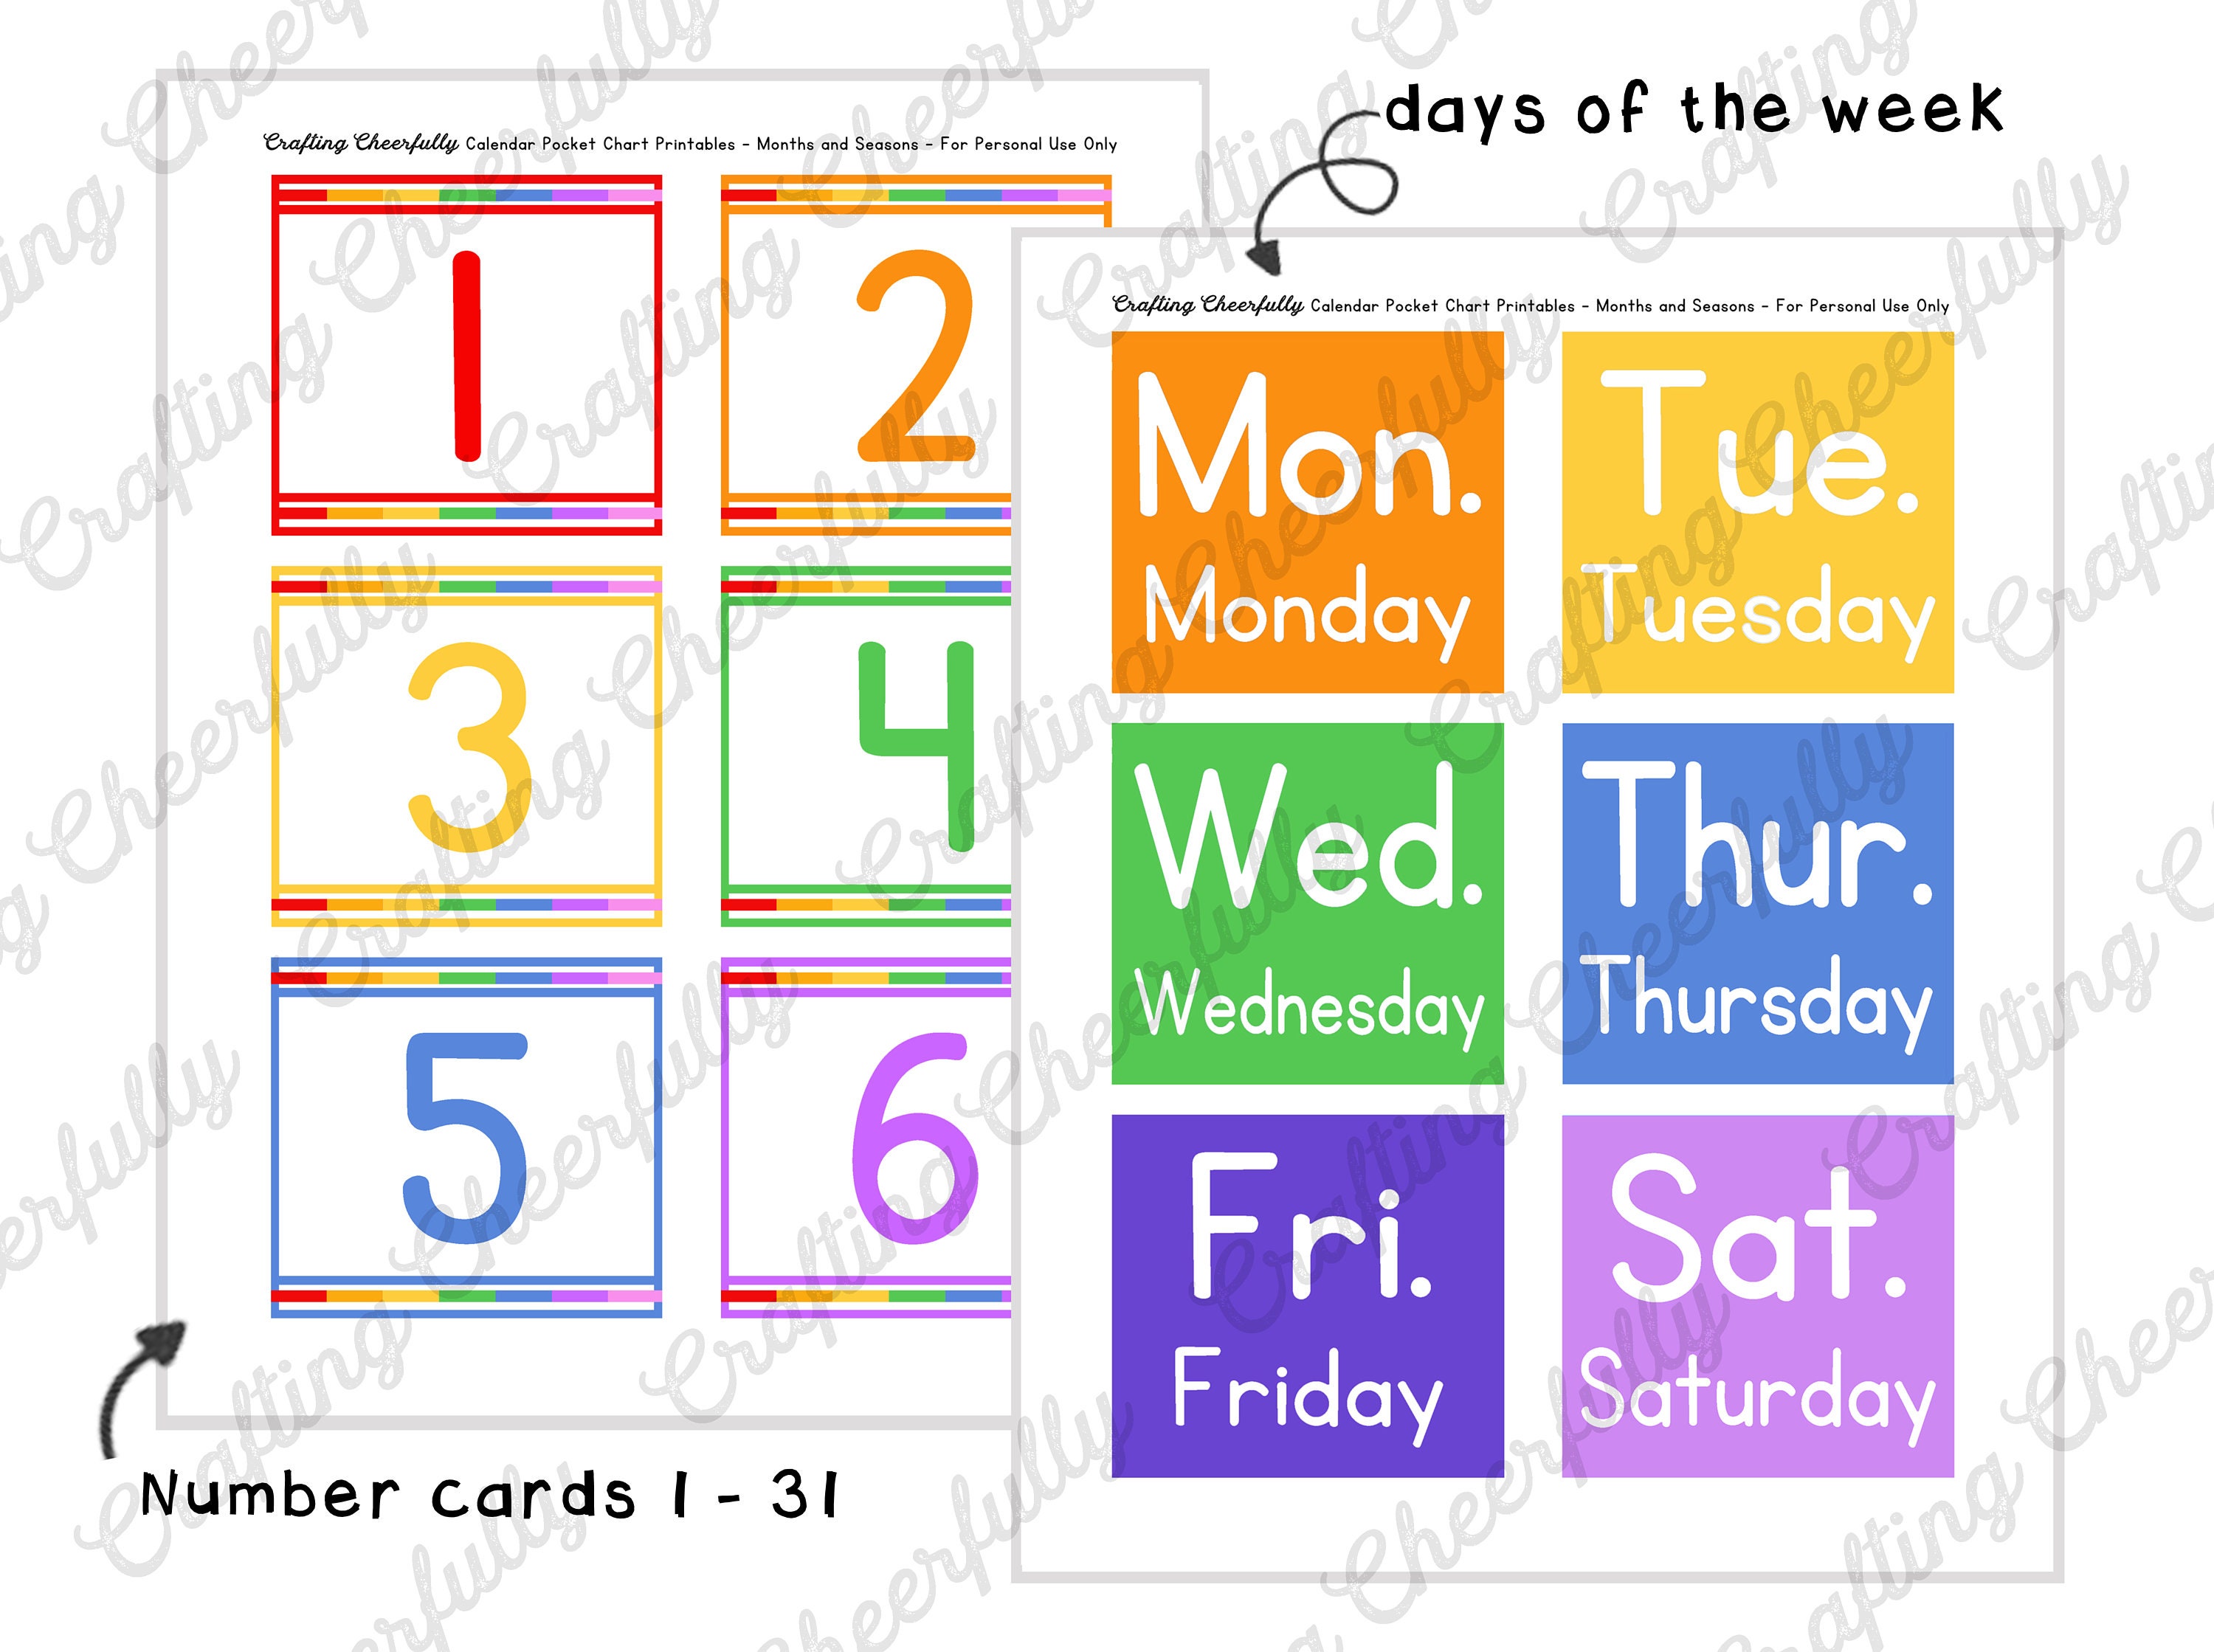 School Calendar Pocket Chart